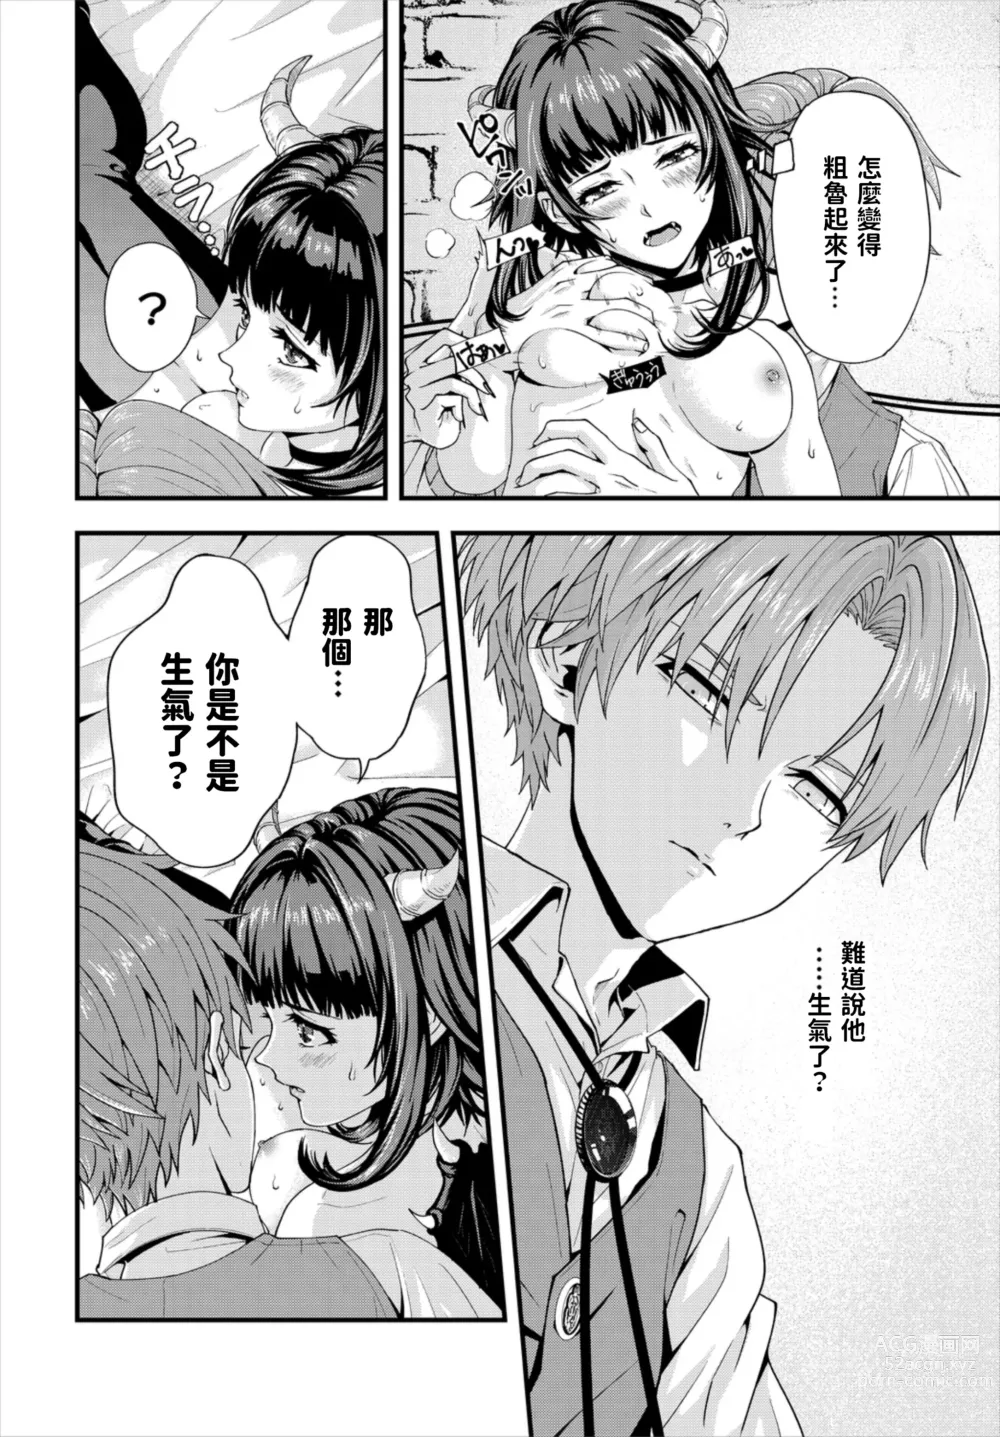 Page 6 of manga Motto Ijimete!